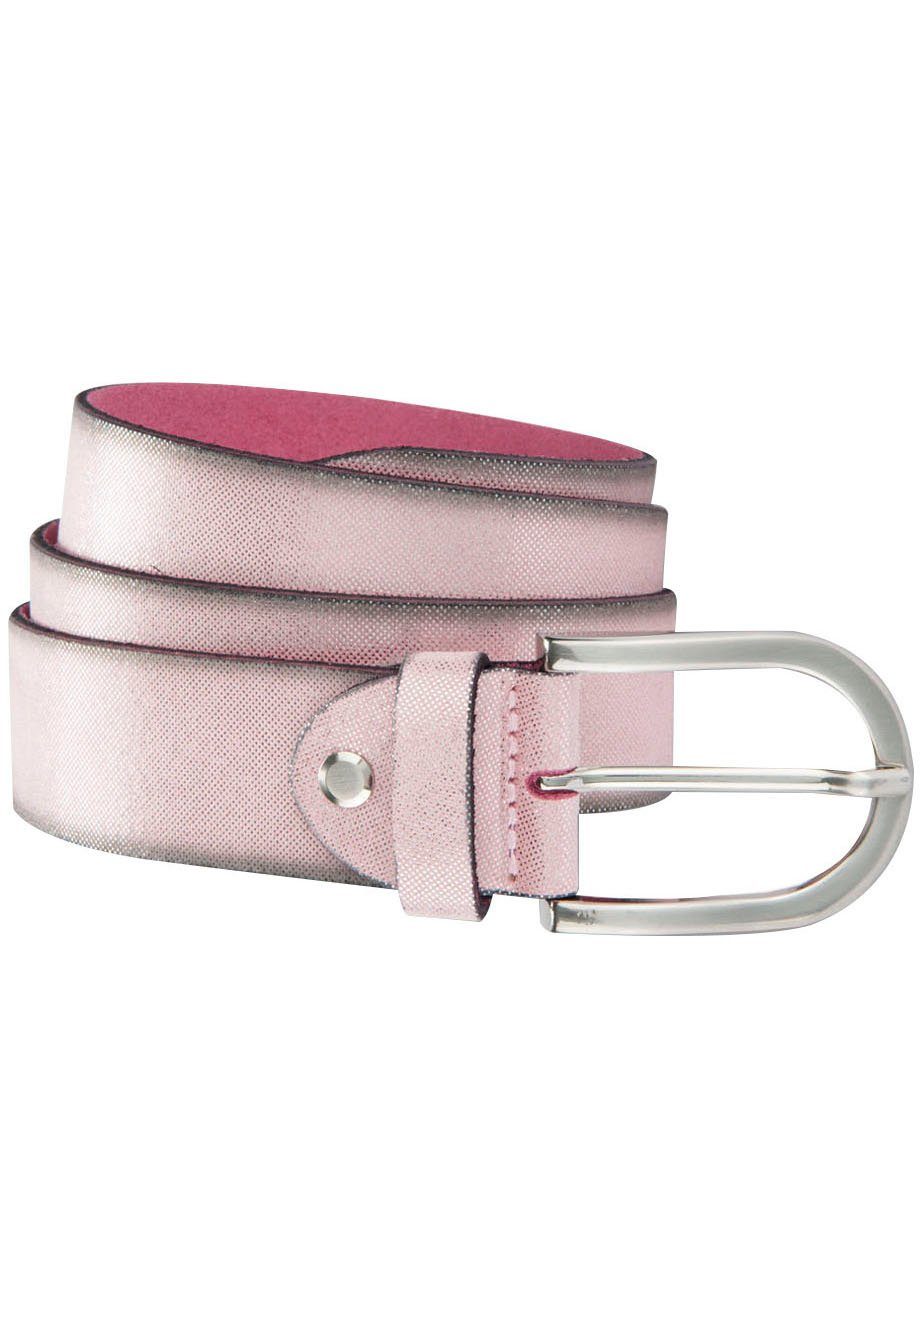 BERND GÖTZ Ledergürtel Ledergürtel aus Velours mit Metallicschimmer und rosa